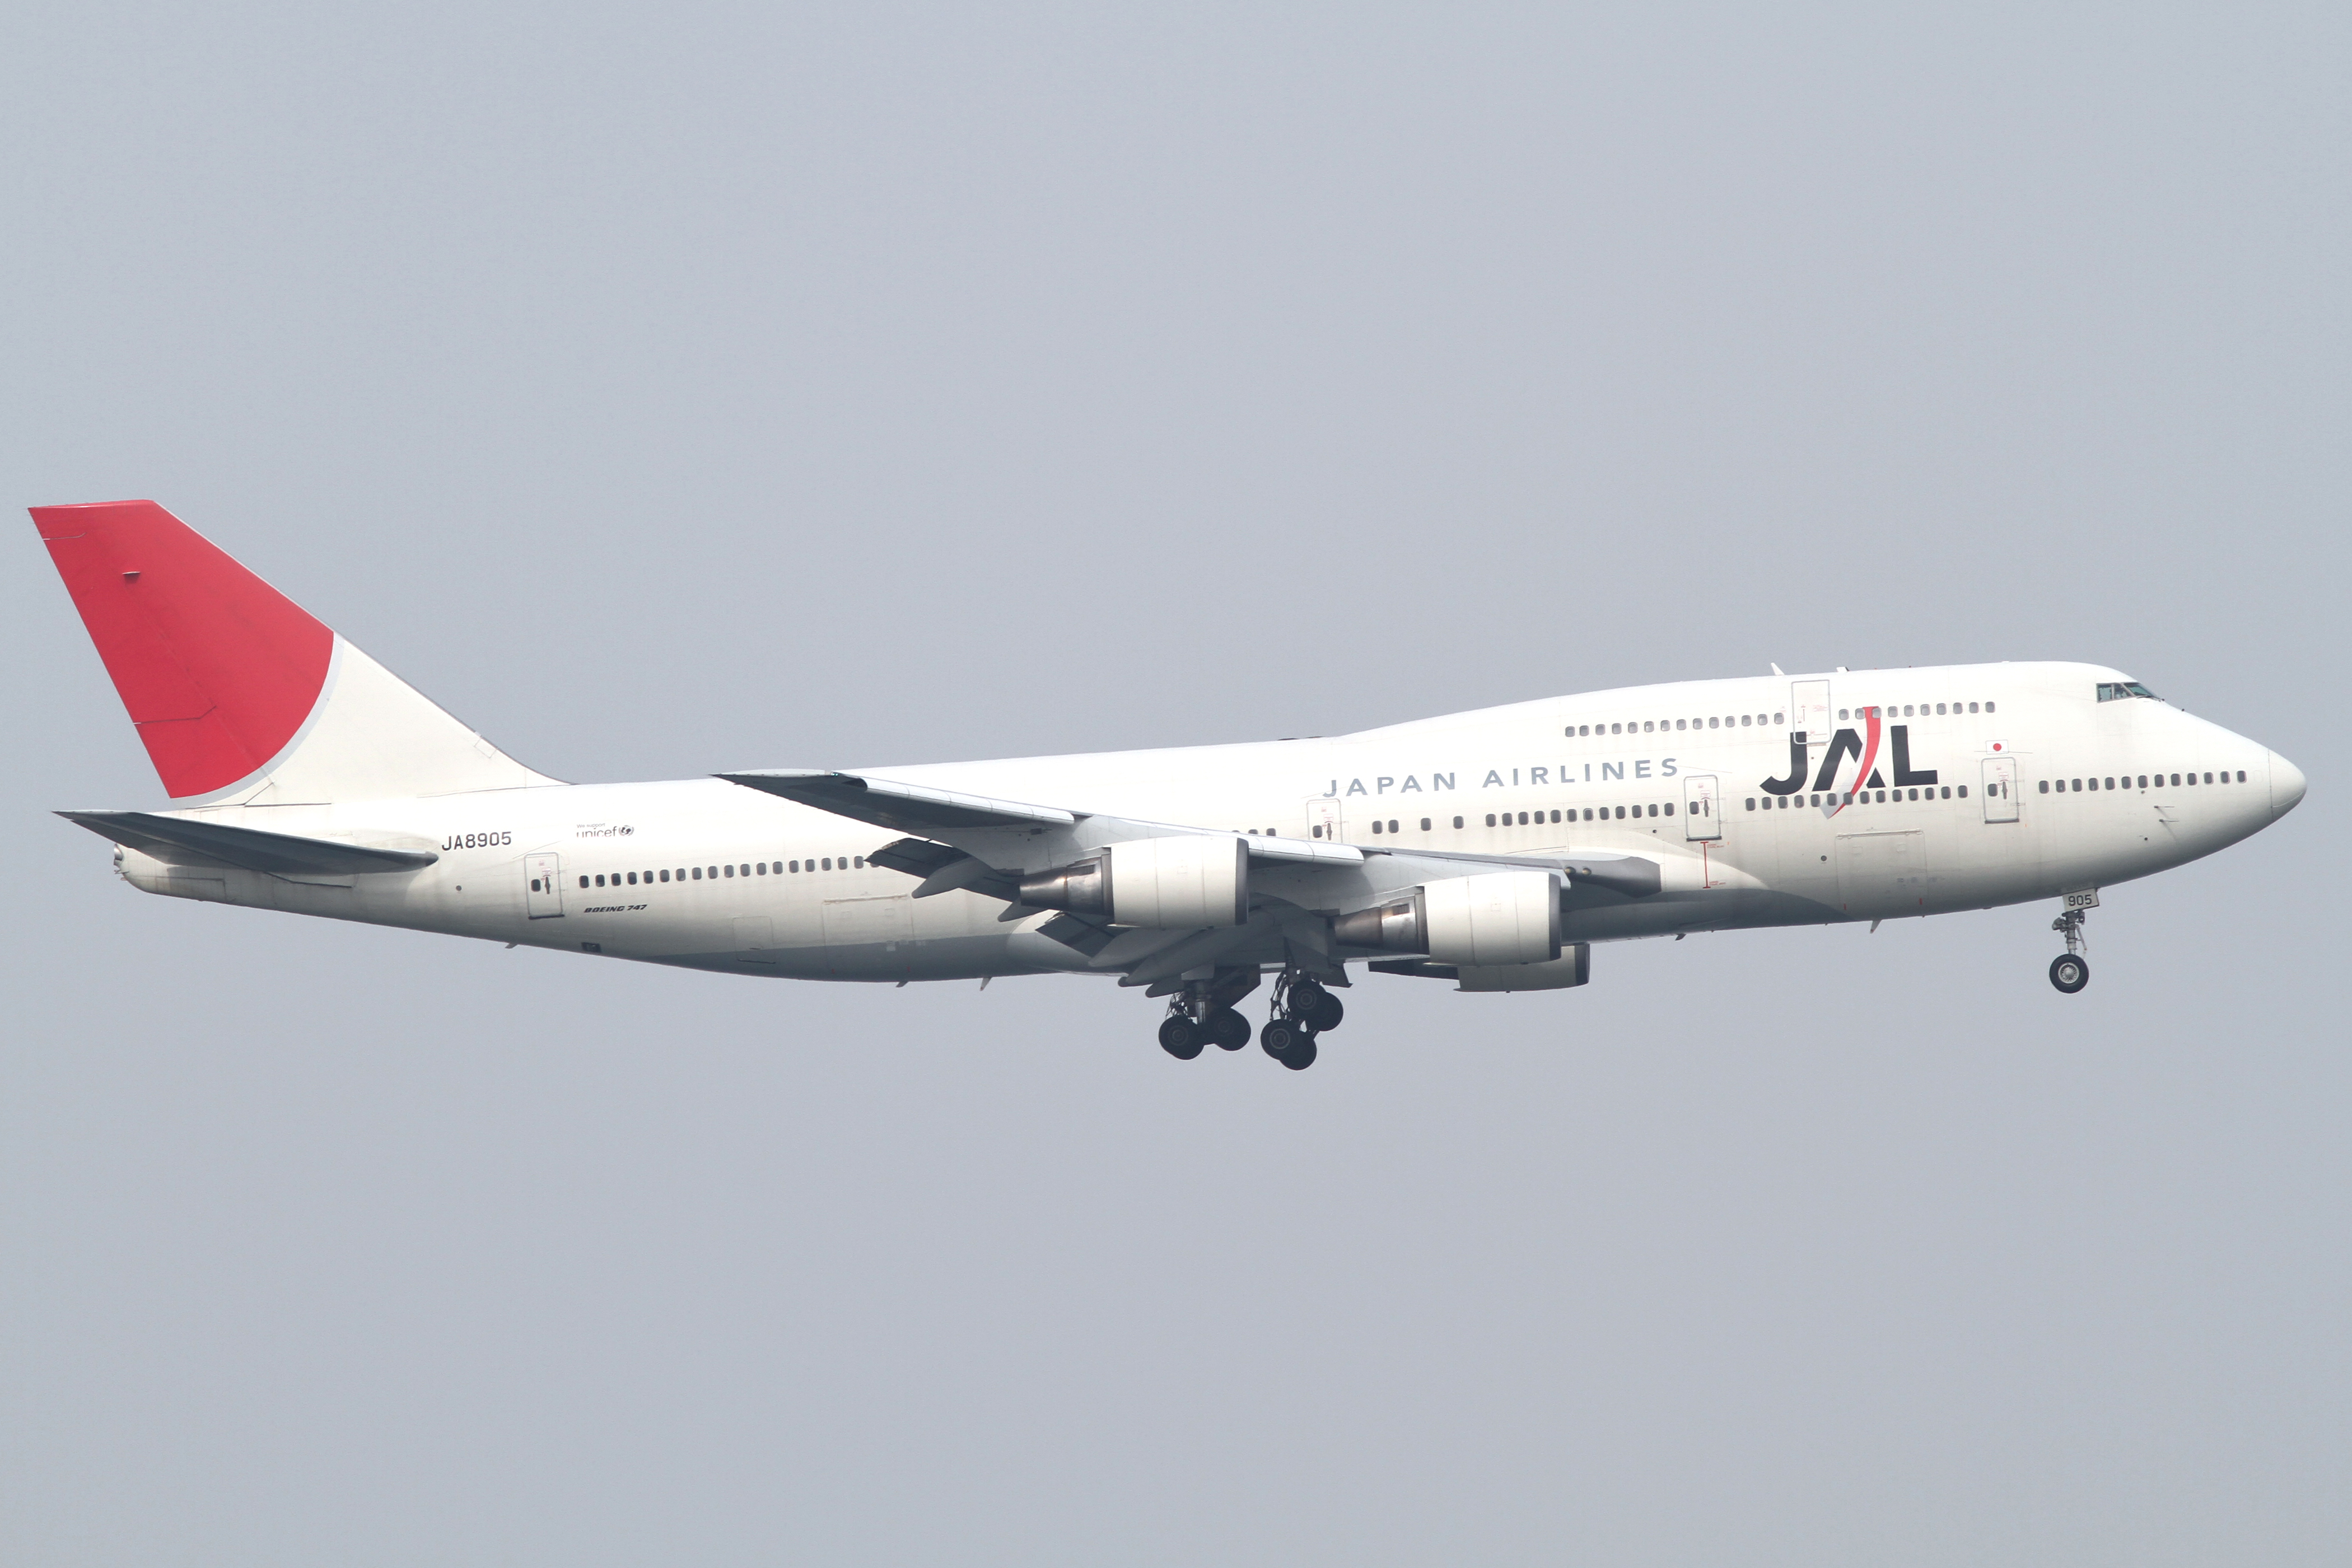 File:JAL B747-400D(JA8905) (4577998775).jpg - Wikimedia Commons